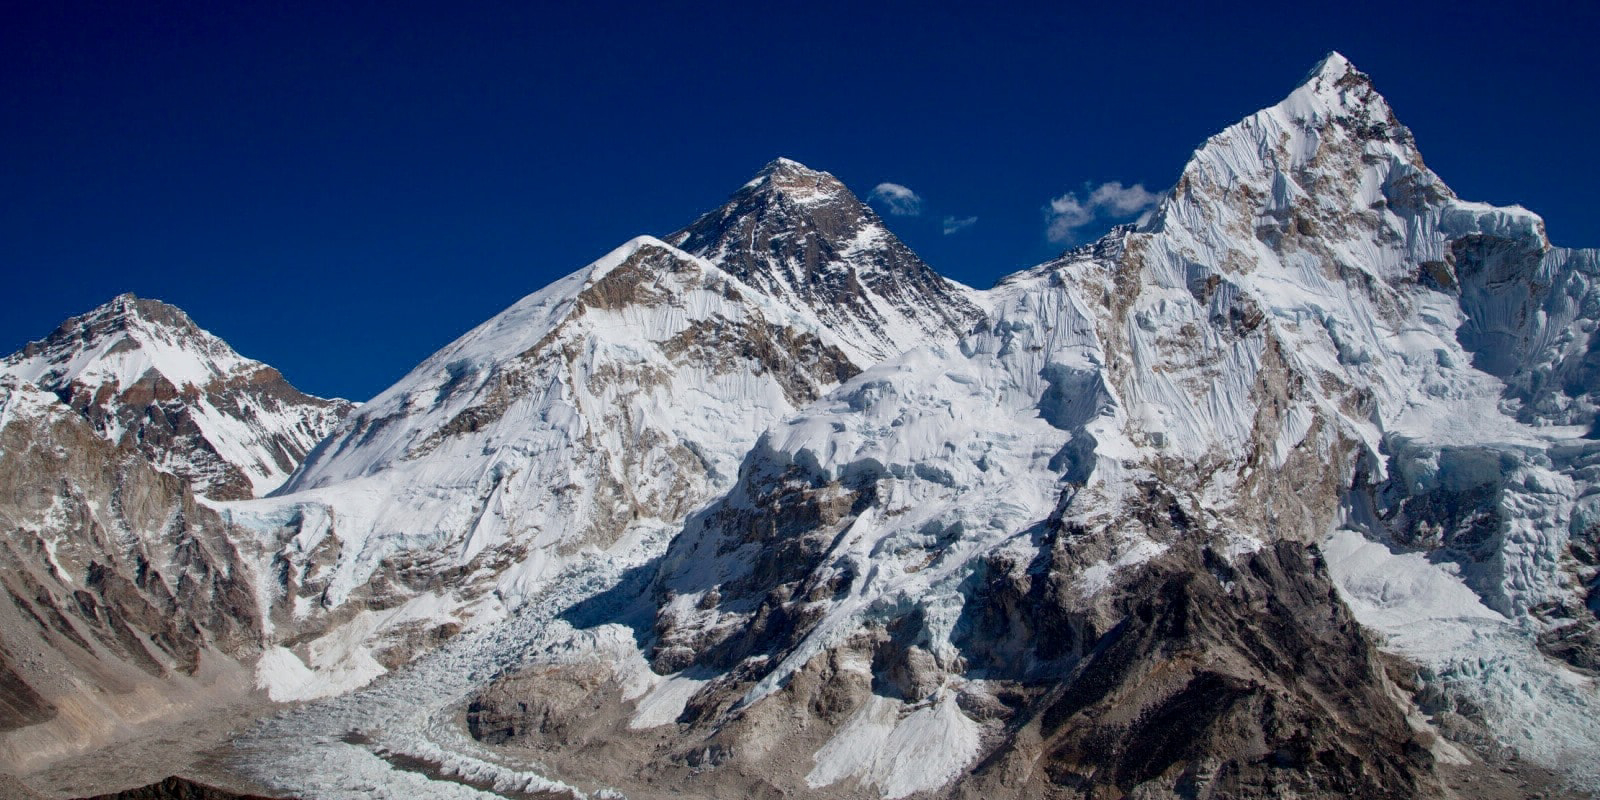 Tag 14: Gipfeltour zum Kala Patthar (5.550m)